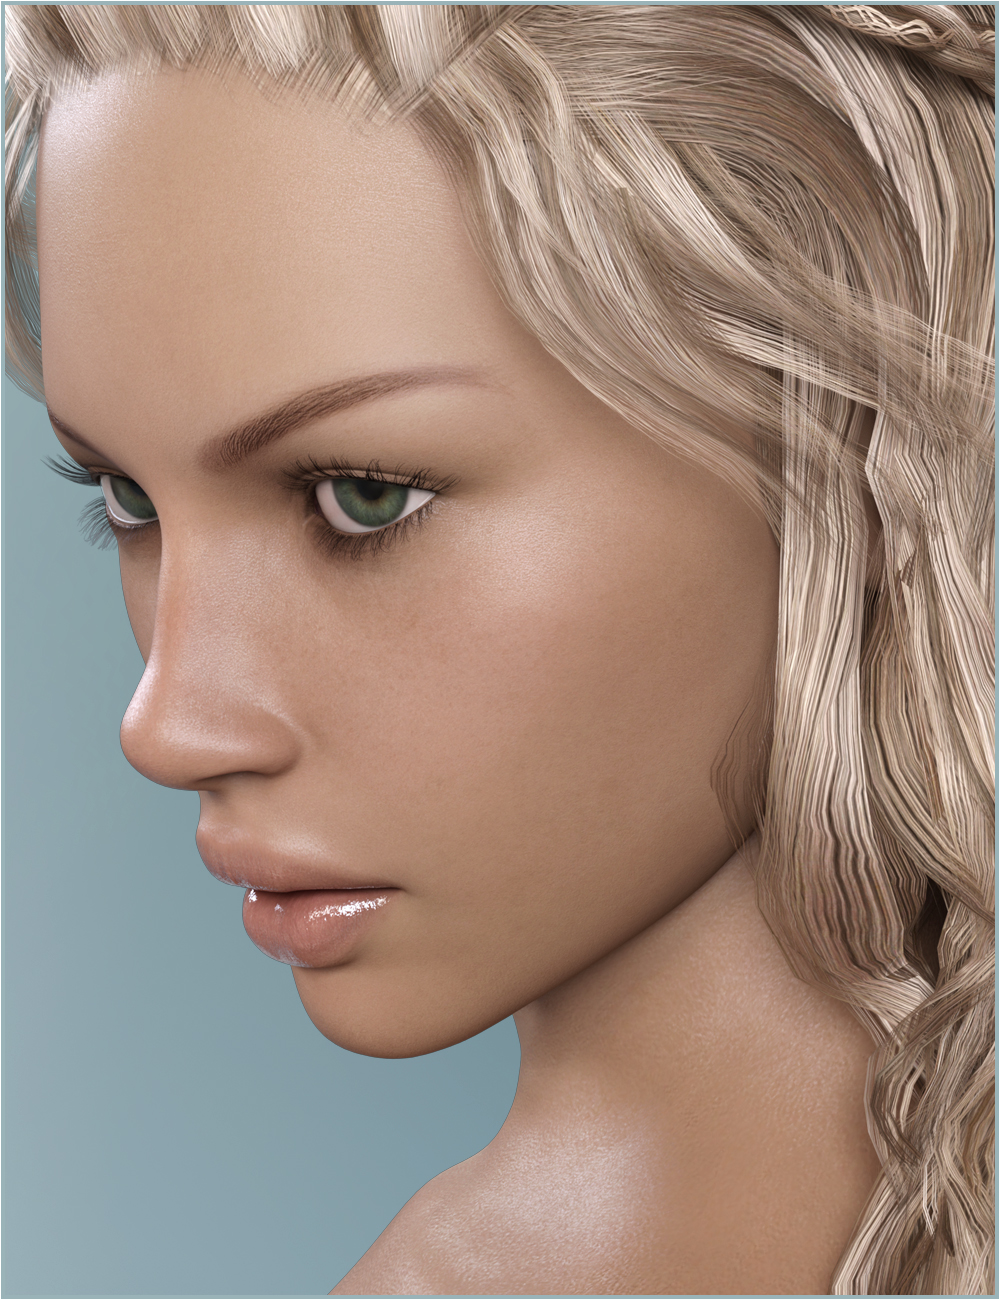 Soraya HD for Rune 7 by: 3DSublimeProductionsFred Winkler ArtSabby, 3D Models by Daz 3D